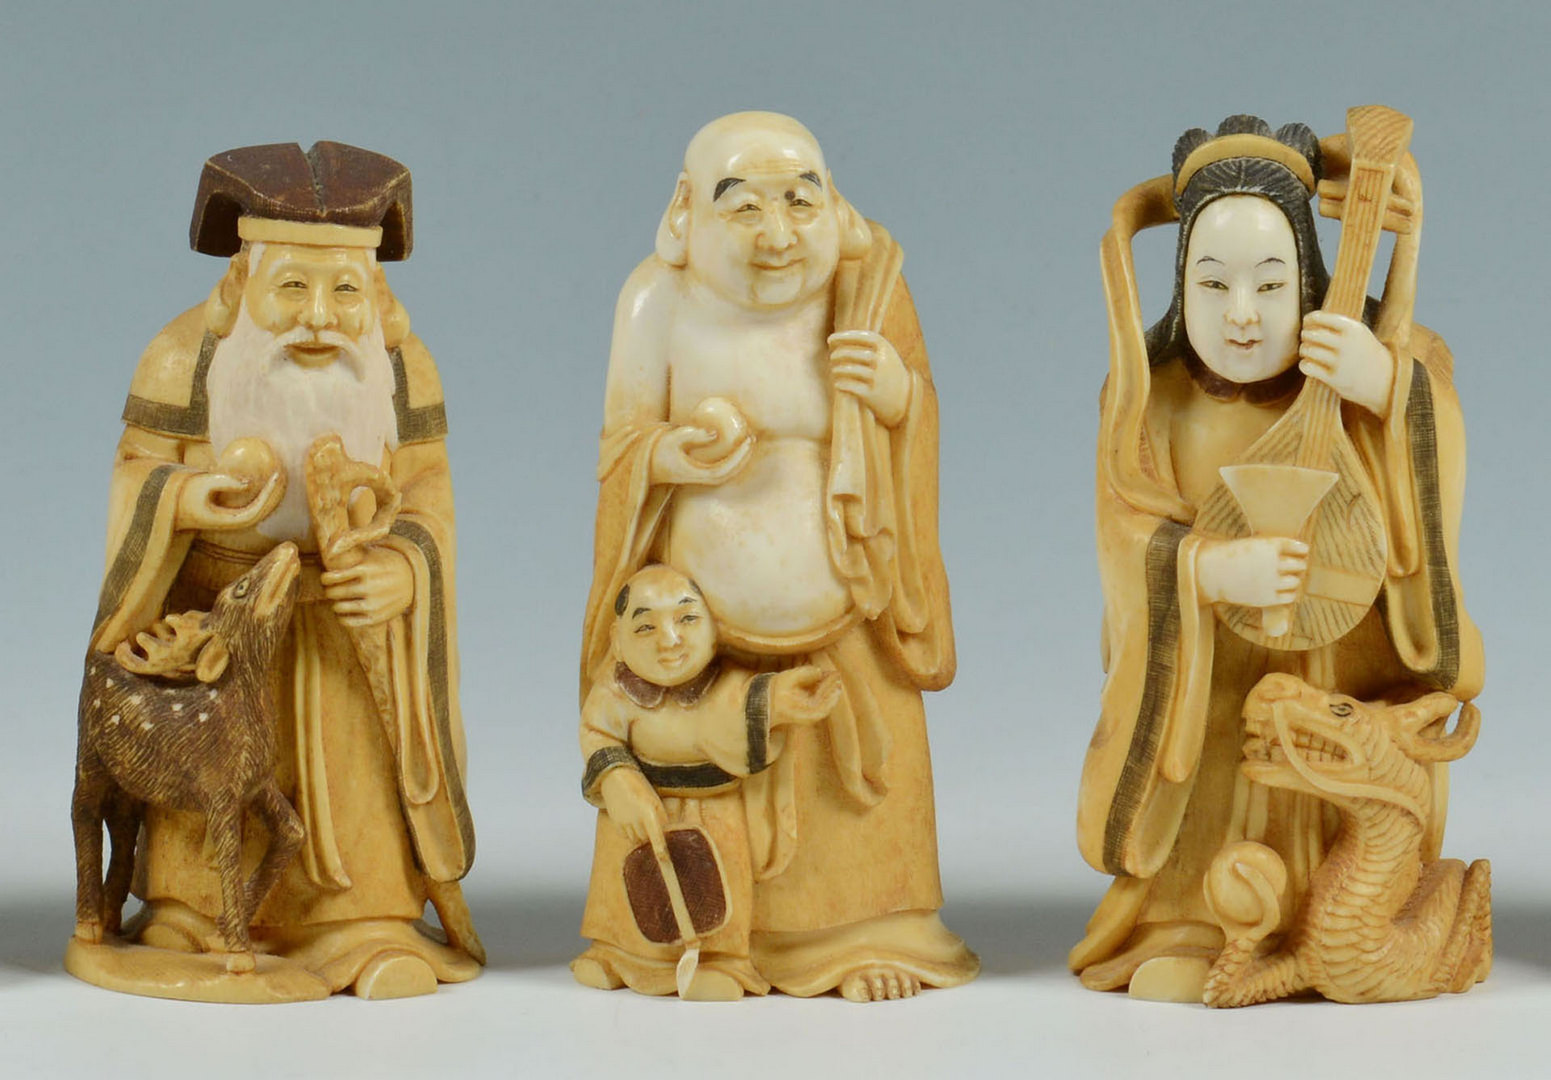 Lot 8: Set of Large Japanese Carved Ivory "7 Lucky Gods"